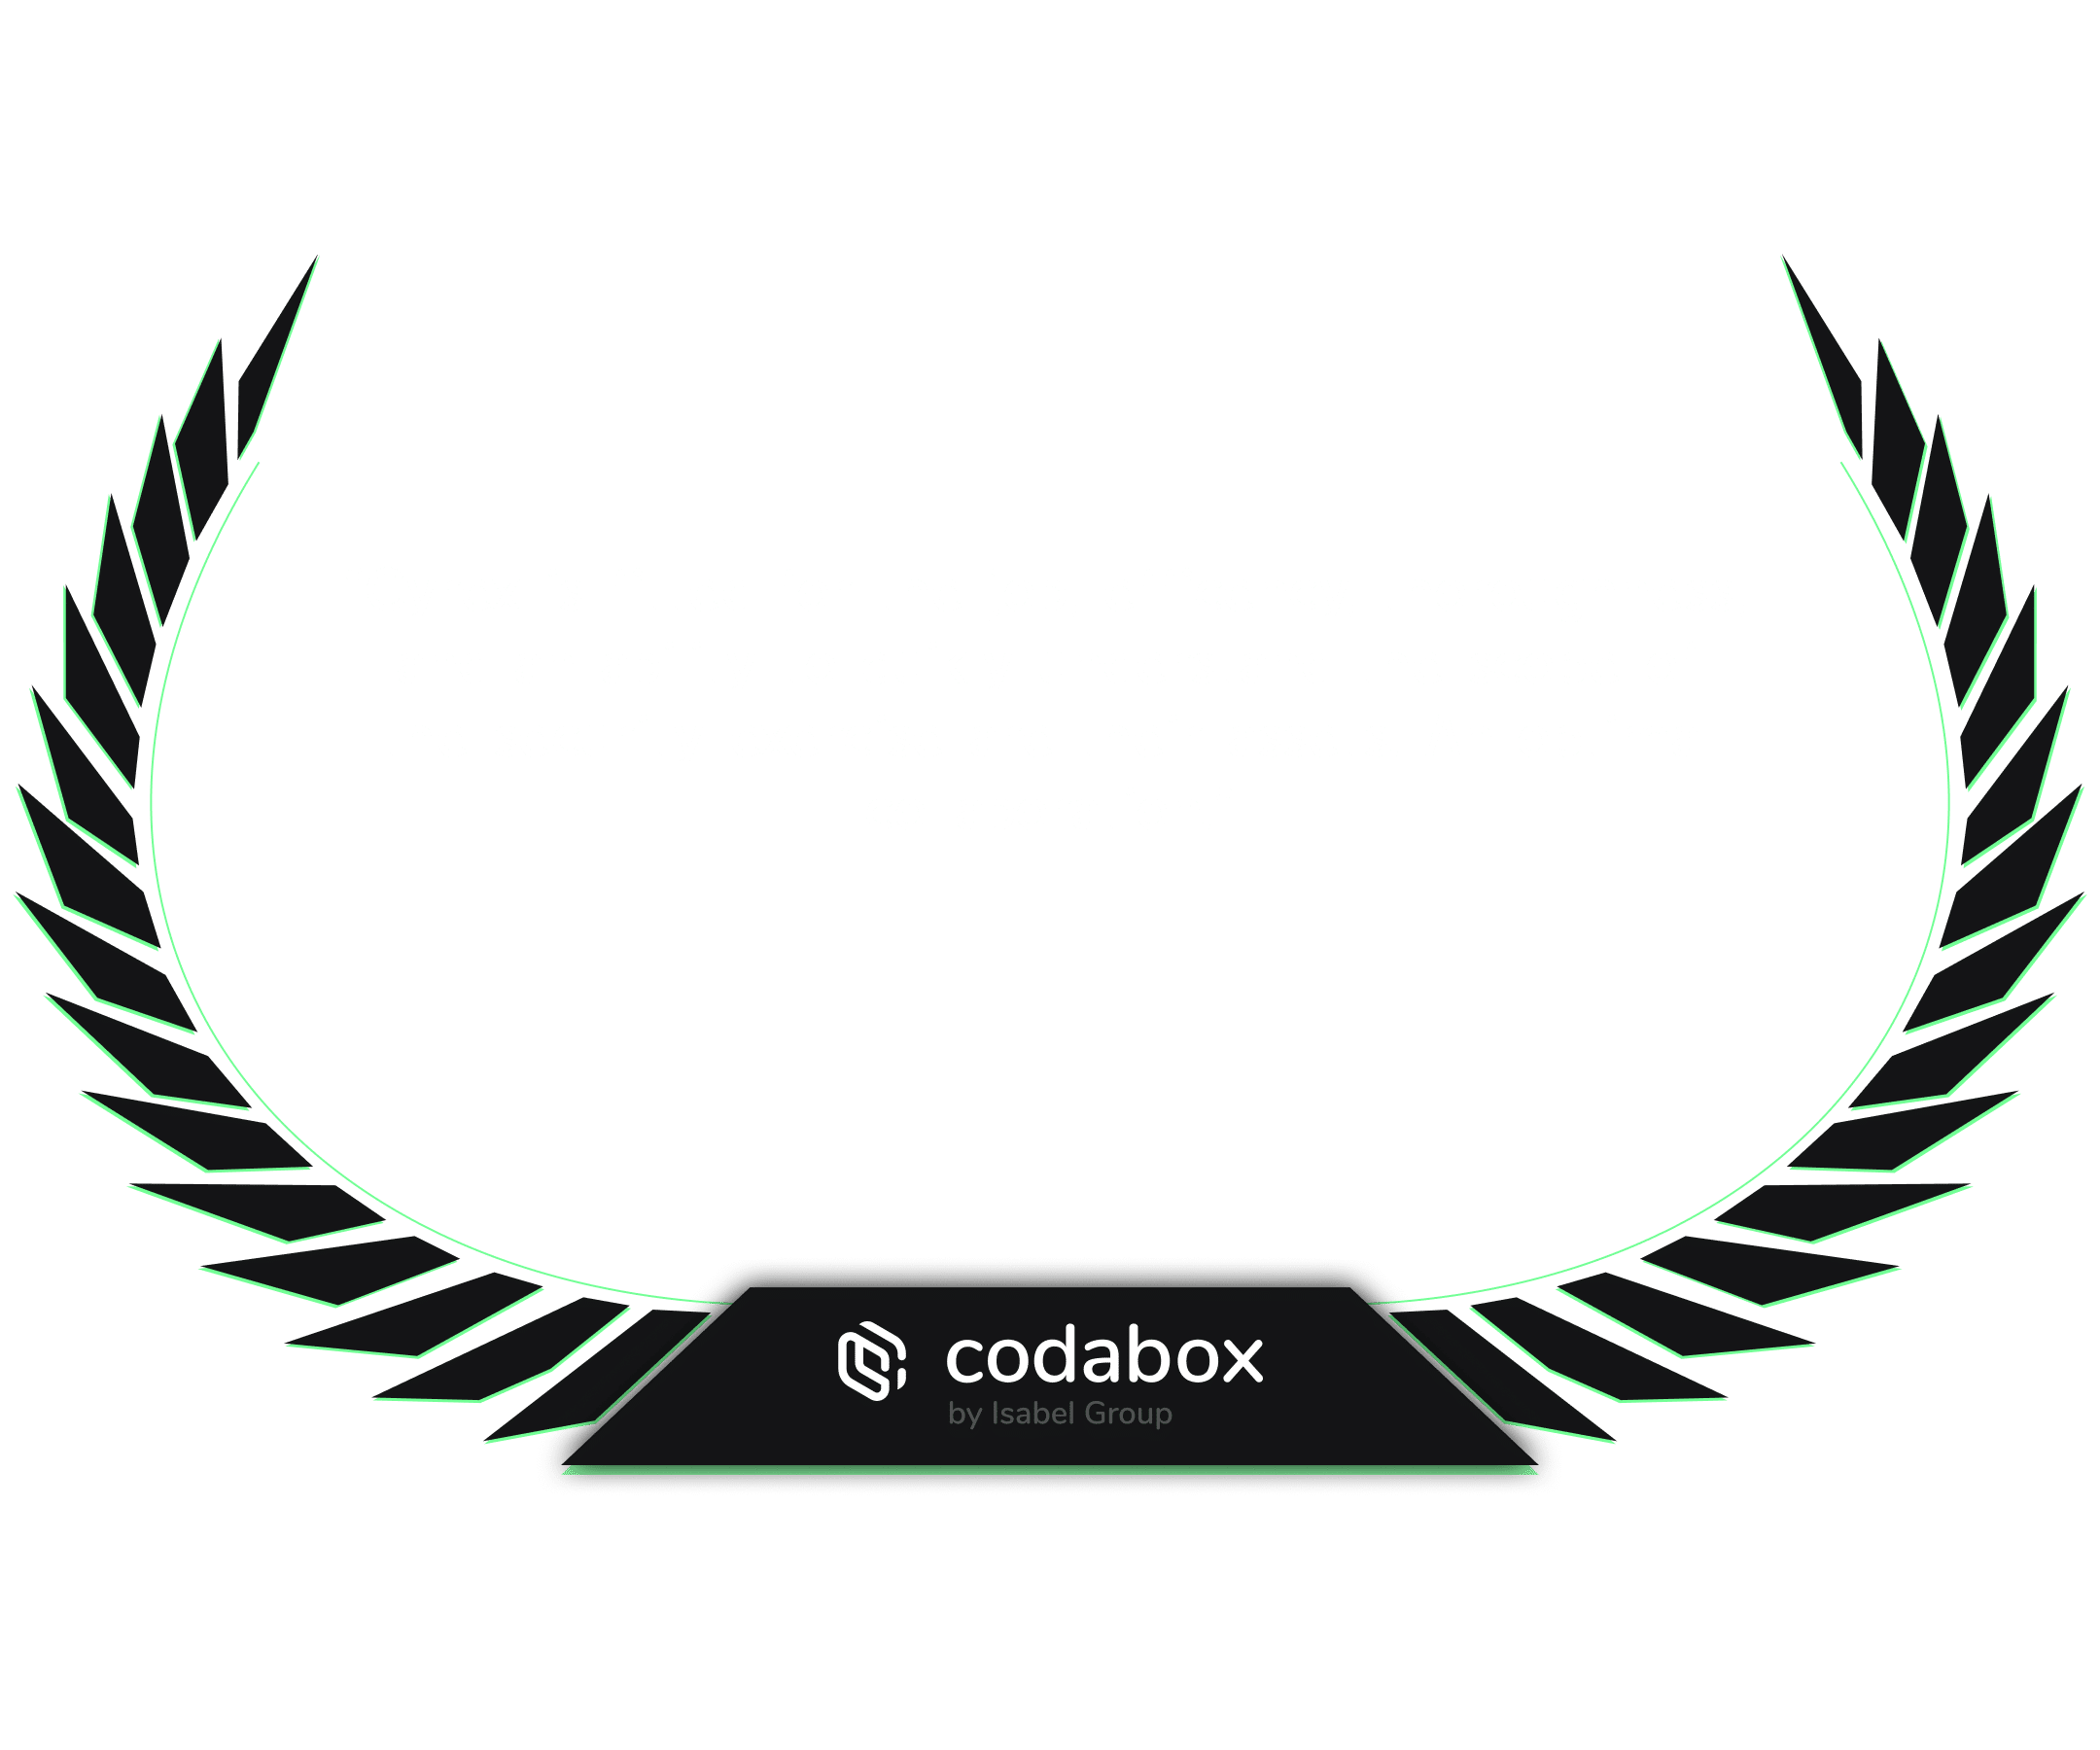 Codabox